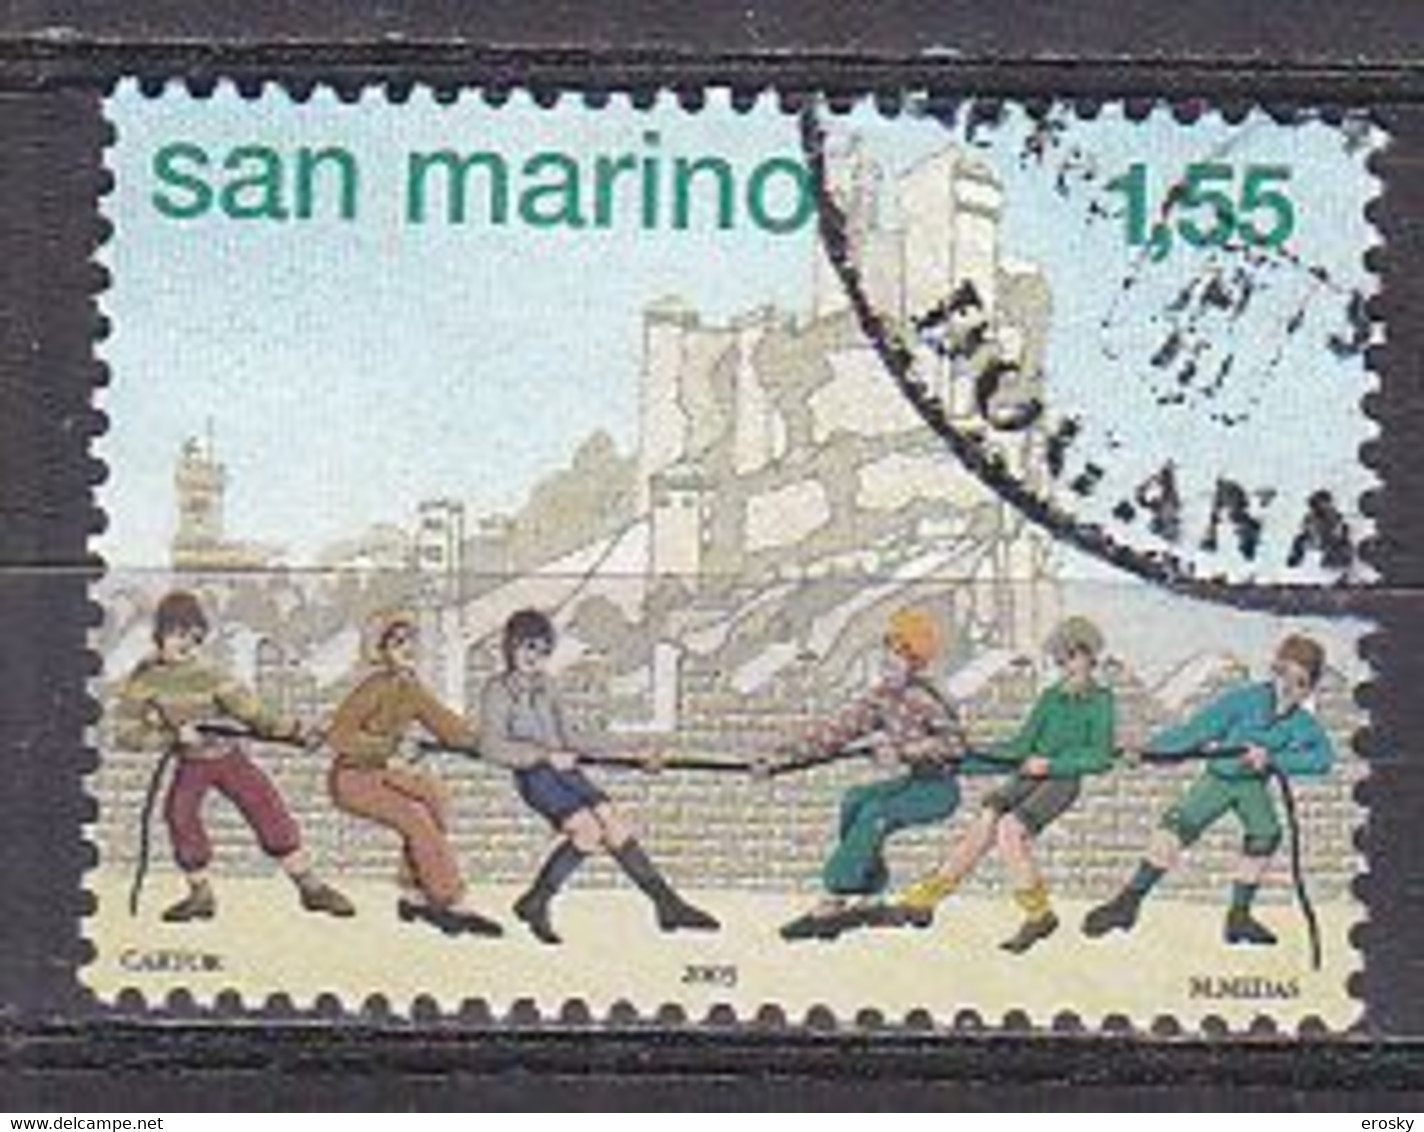 Y9006 - SAN MARINO Ss N°1953 - SAINT-MARIN Yv N°1911 - Oblitérés